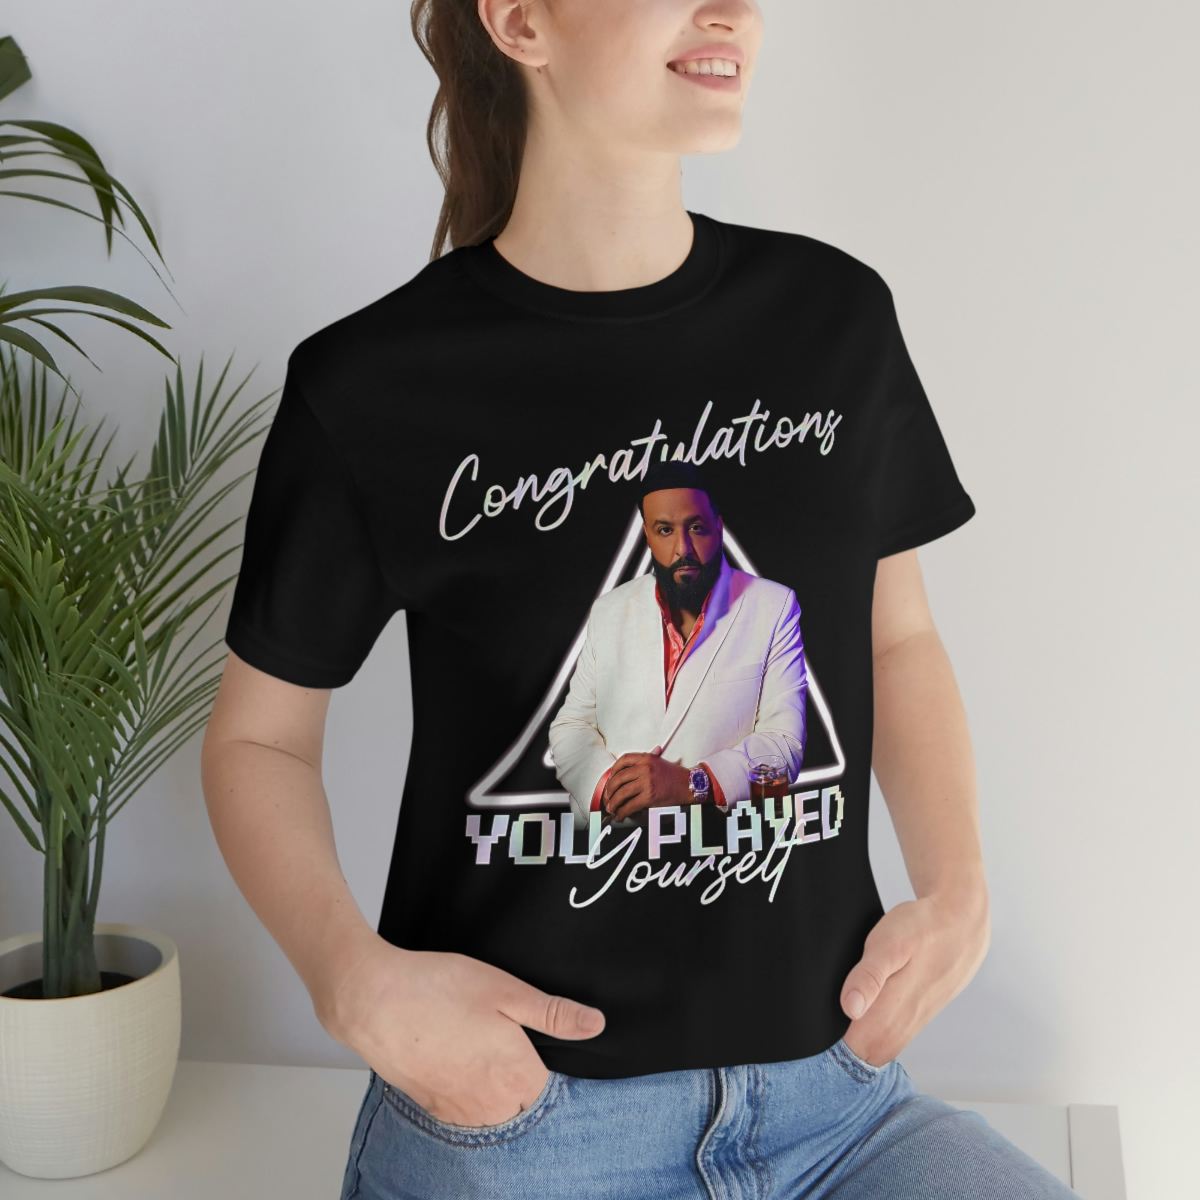  CONGRATULATIONS YOU PLAYED YOURSELF SHIRT T-Shirt